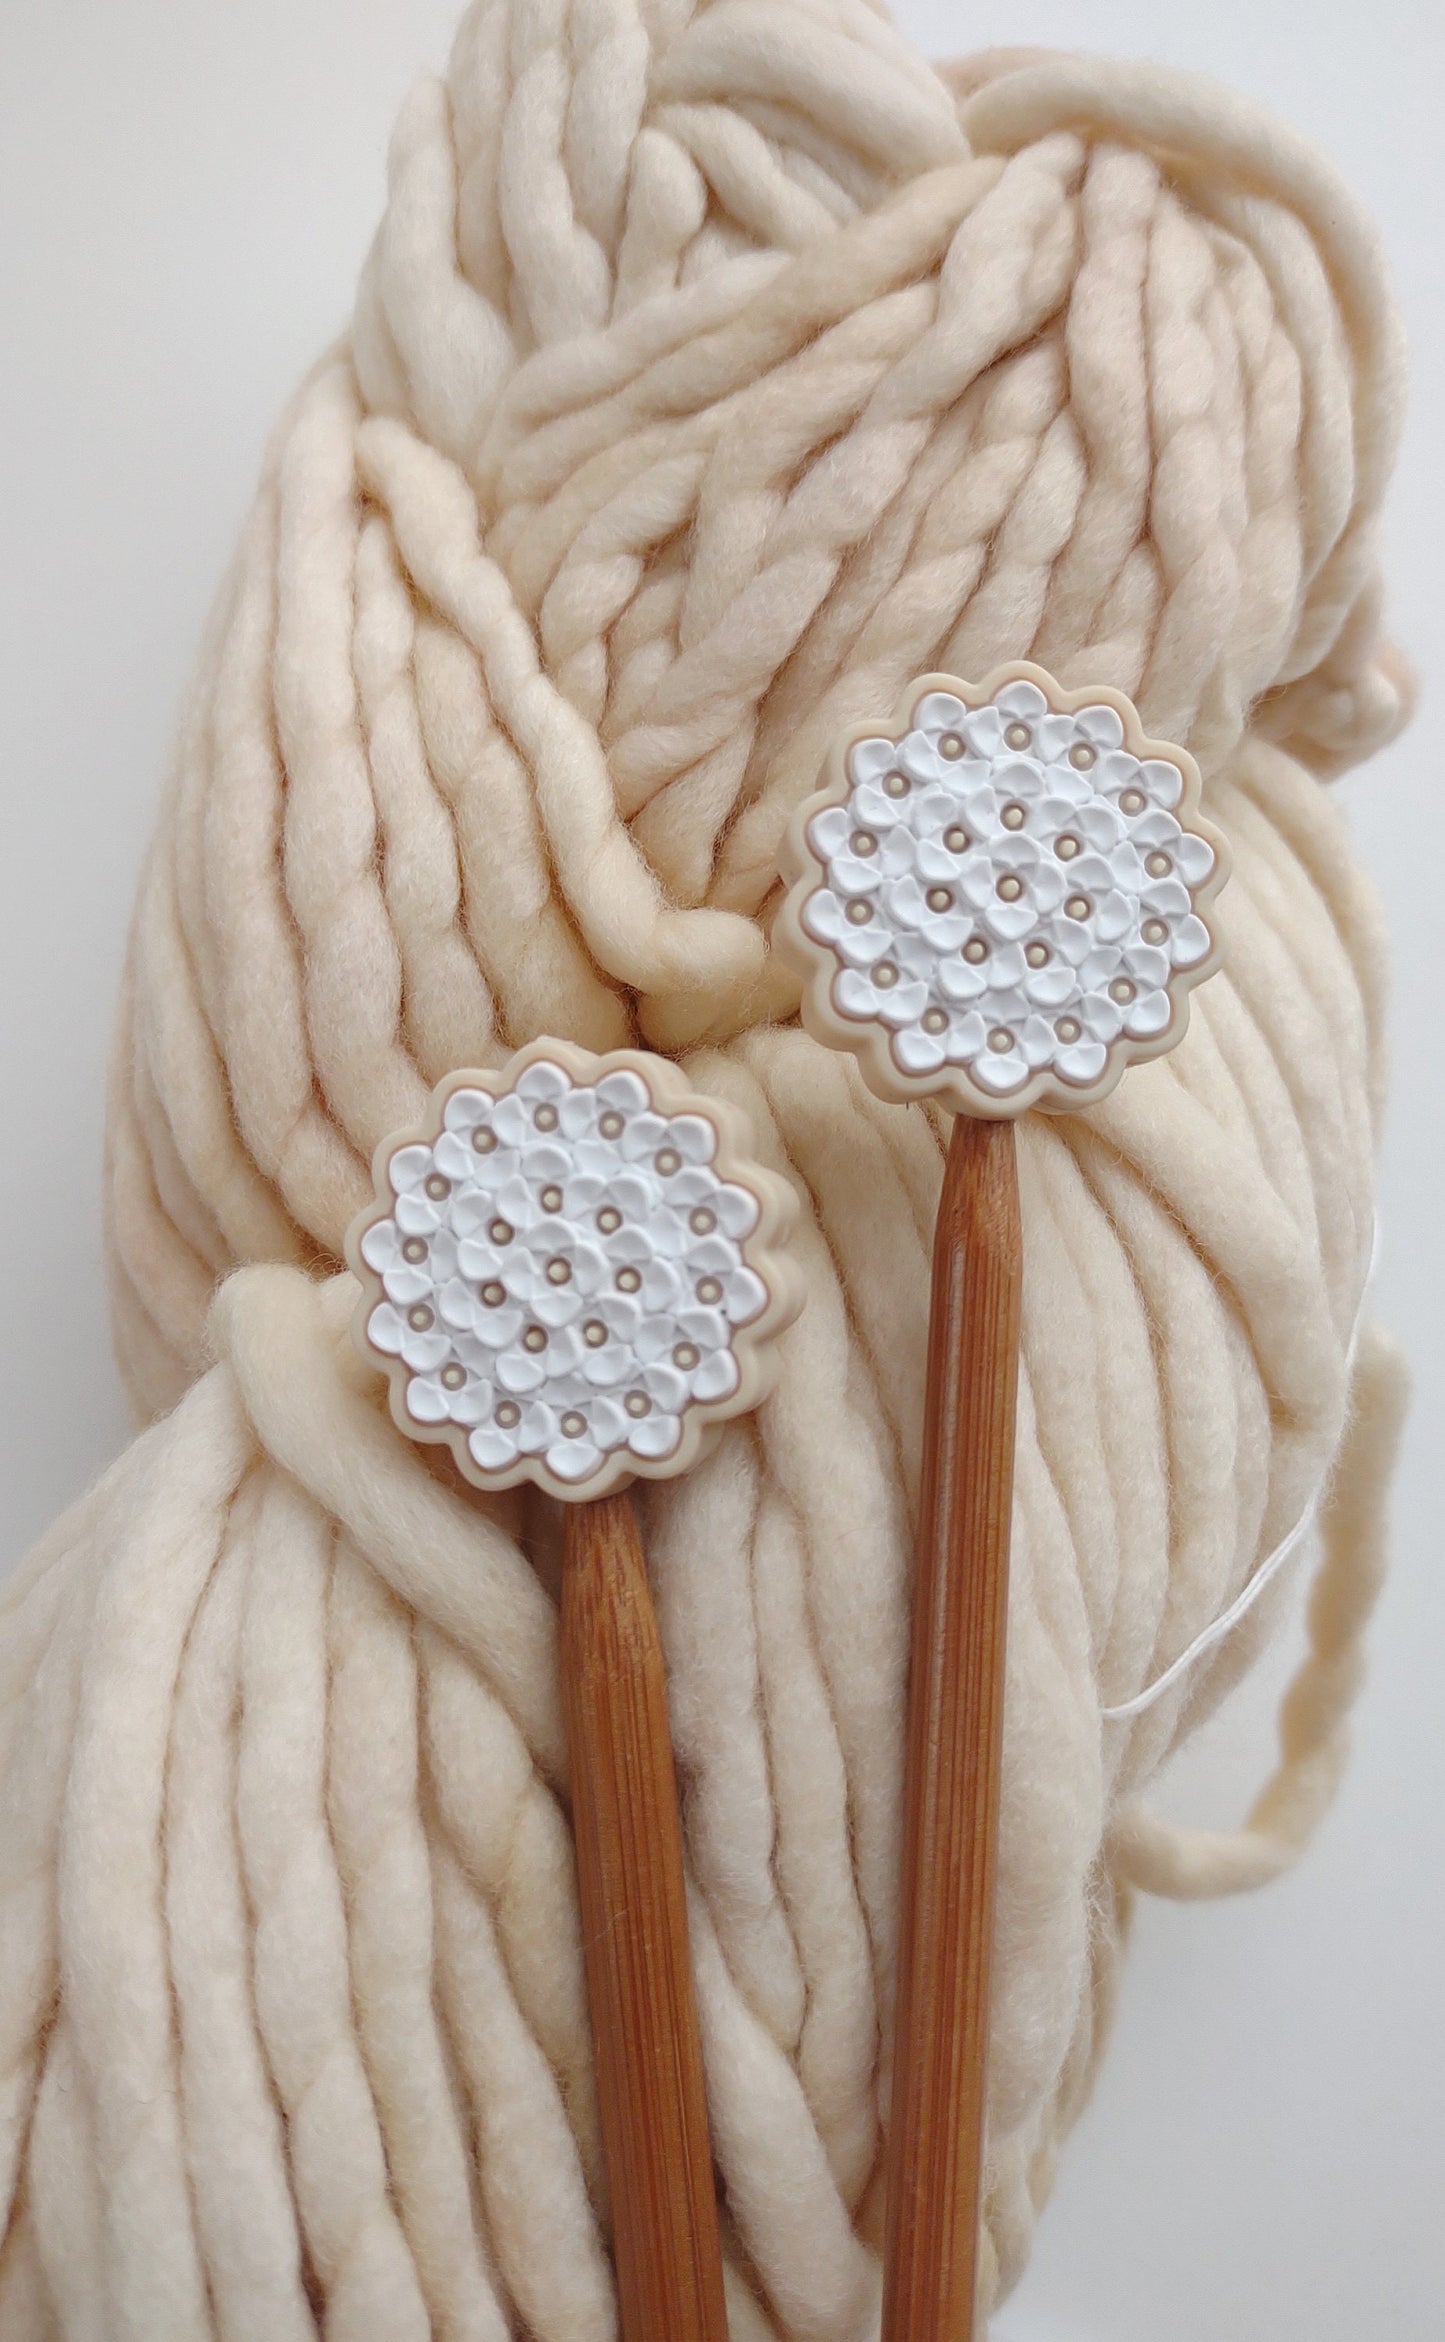 White Hydrangea Knitting Needle Stitch Stoppers. Needle Protectors. Knitting Needle Stoppers. Flower Knitting Notions Accessories Supplies.